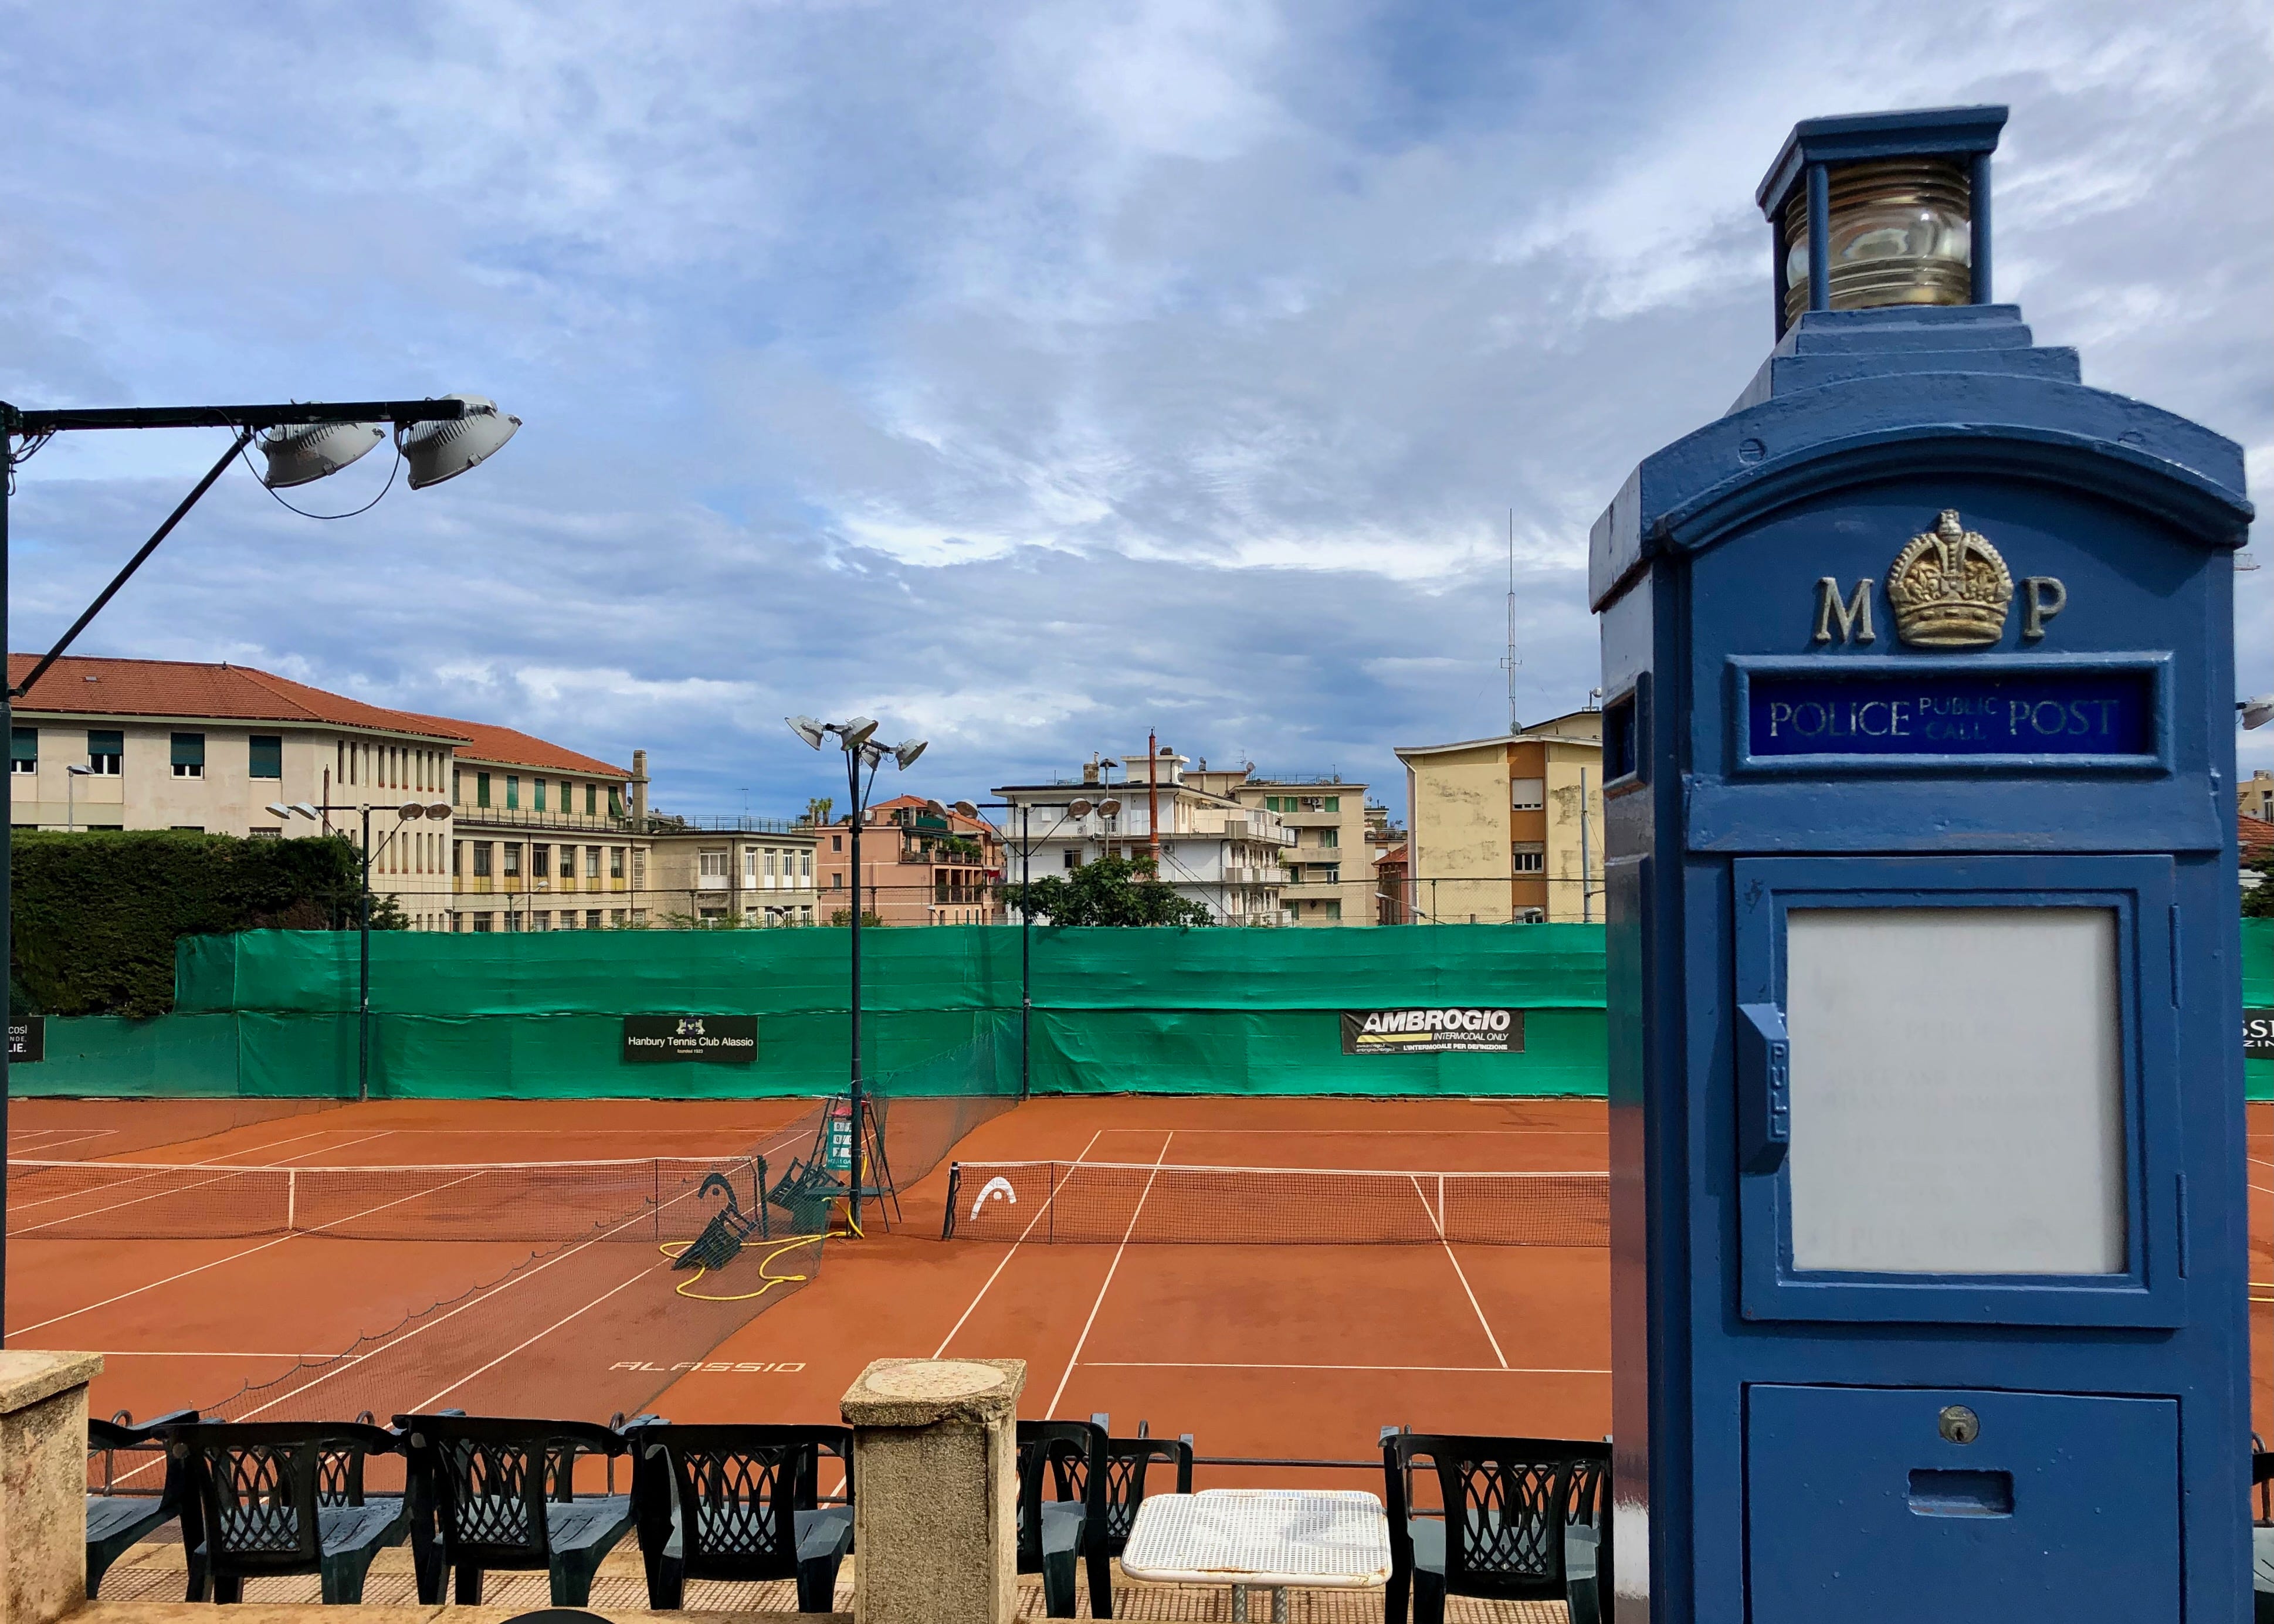 Hanbury Tennis Club Alassio, Italy